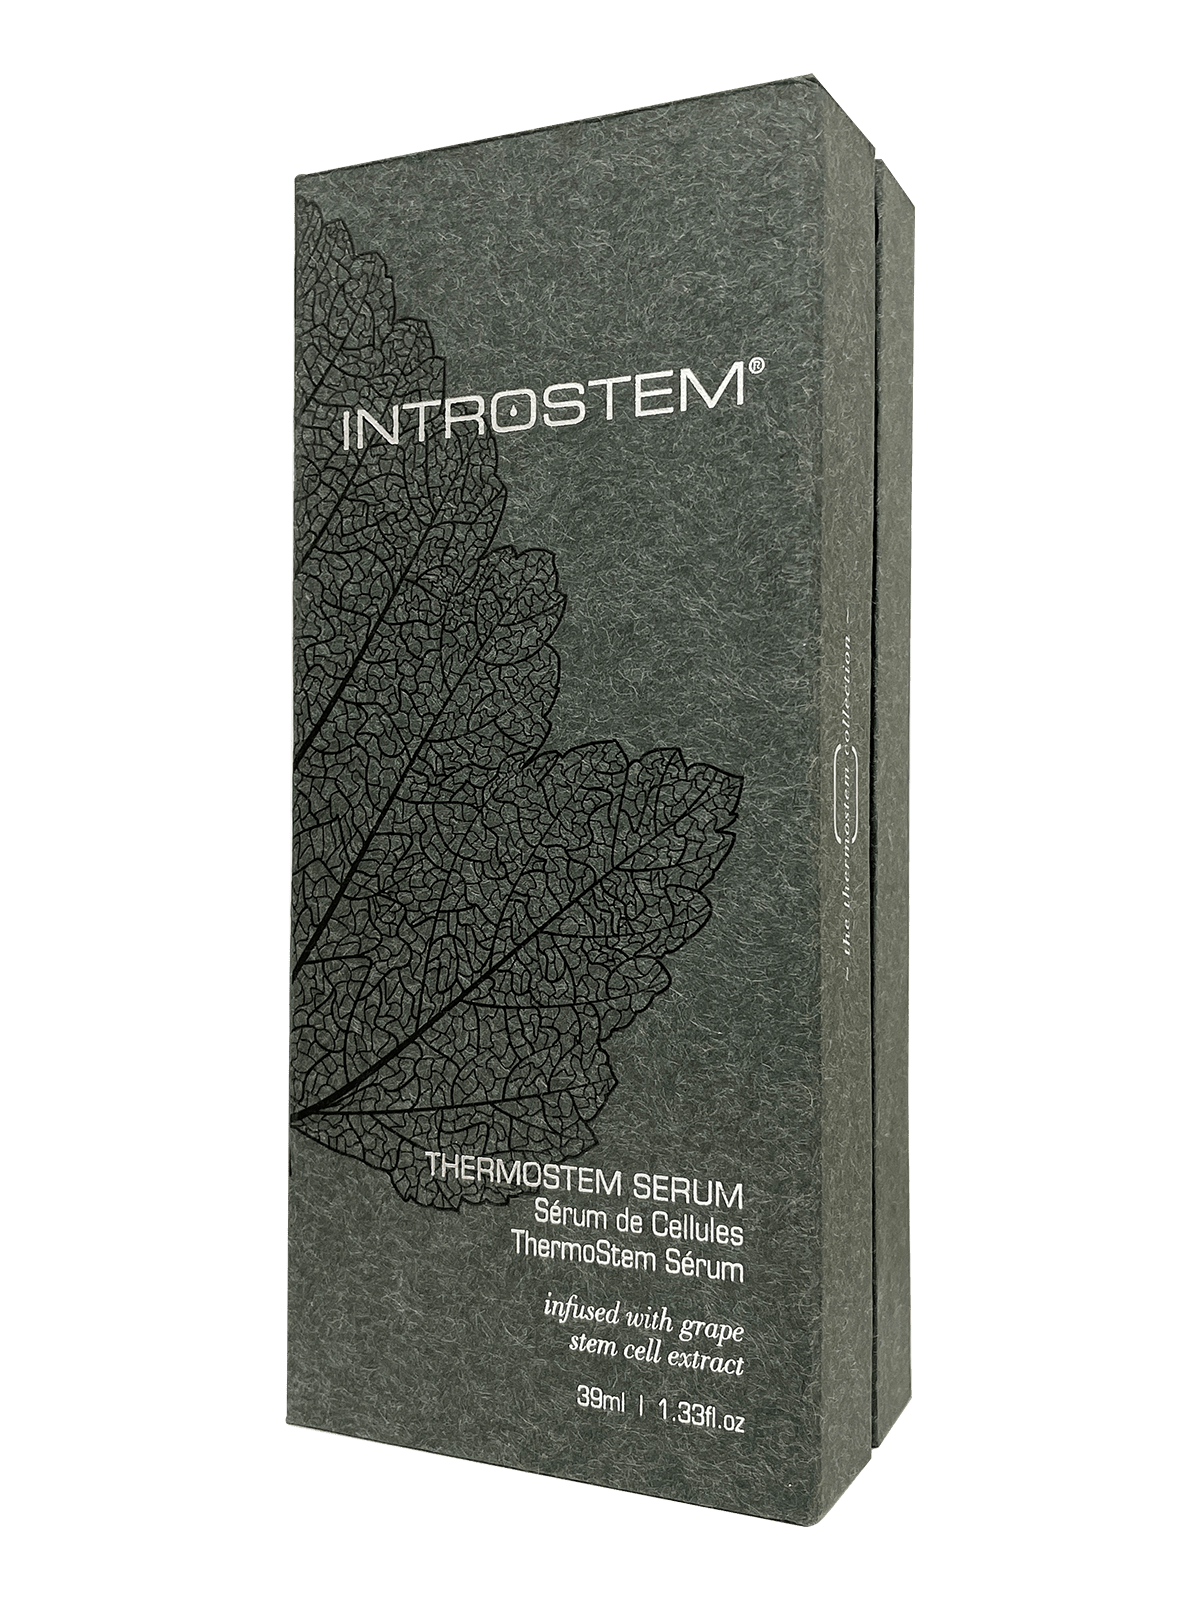 Thermostem-Serum-package